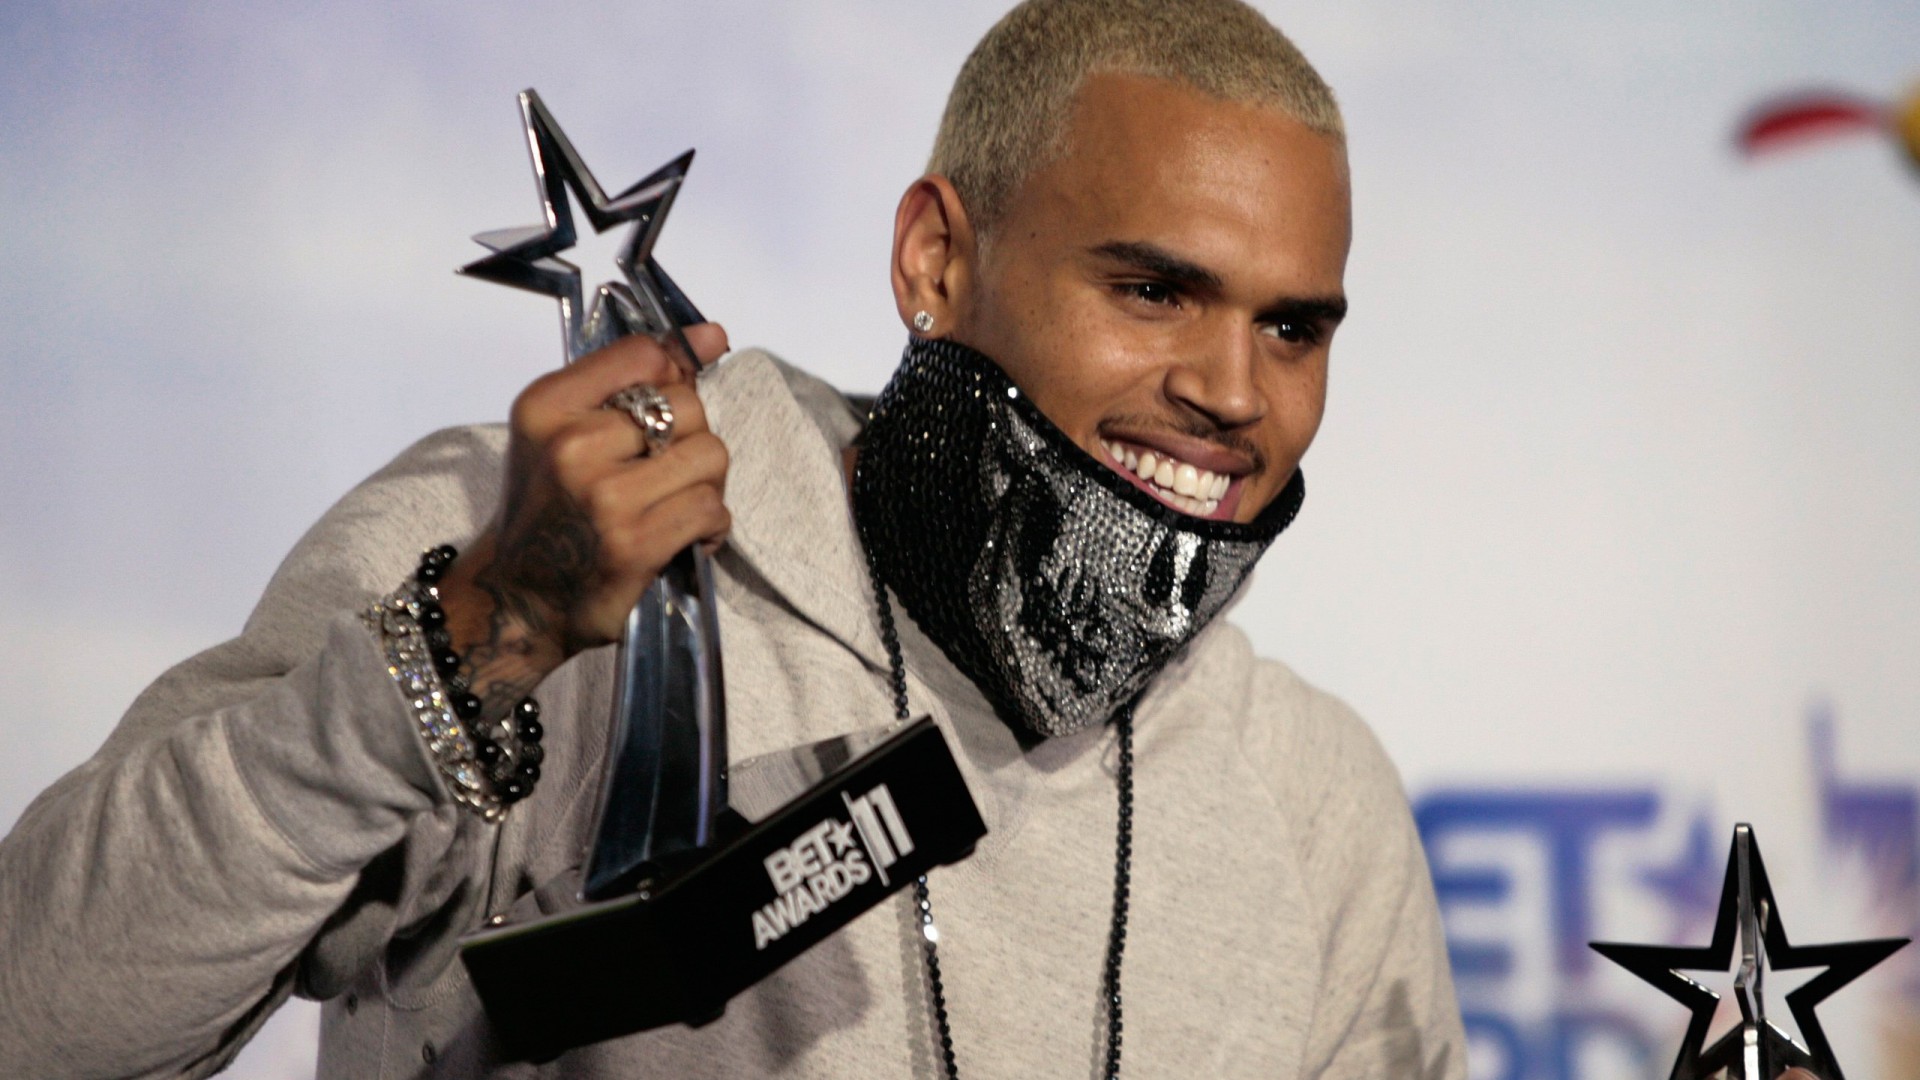 Chris Brown Wallpaper HD Image Celebrity High